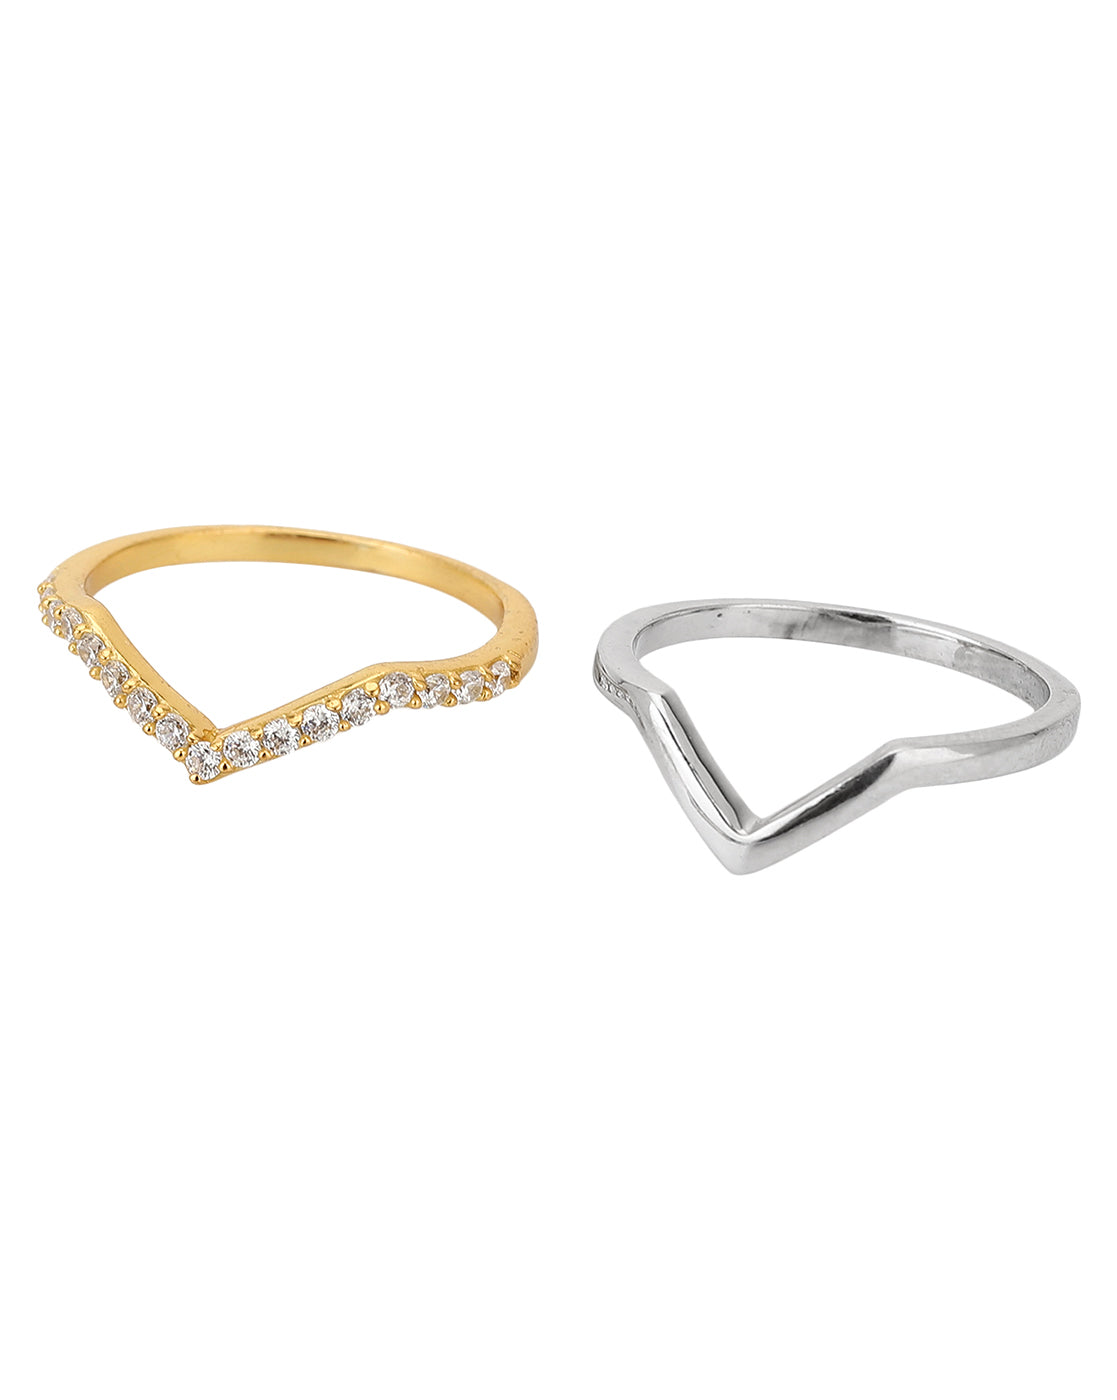 Buy Gold Plated Adjustable Toe Ring/Minji Online|Kollam Supreme | Toe rings,  Gold, Plating